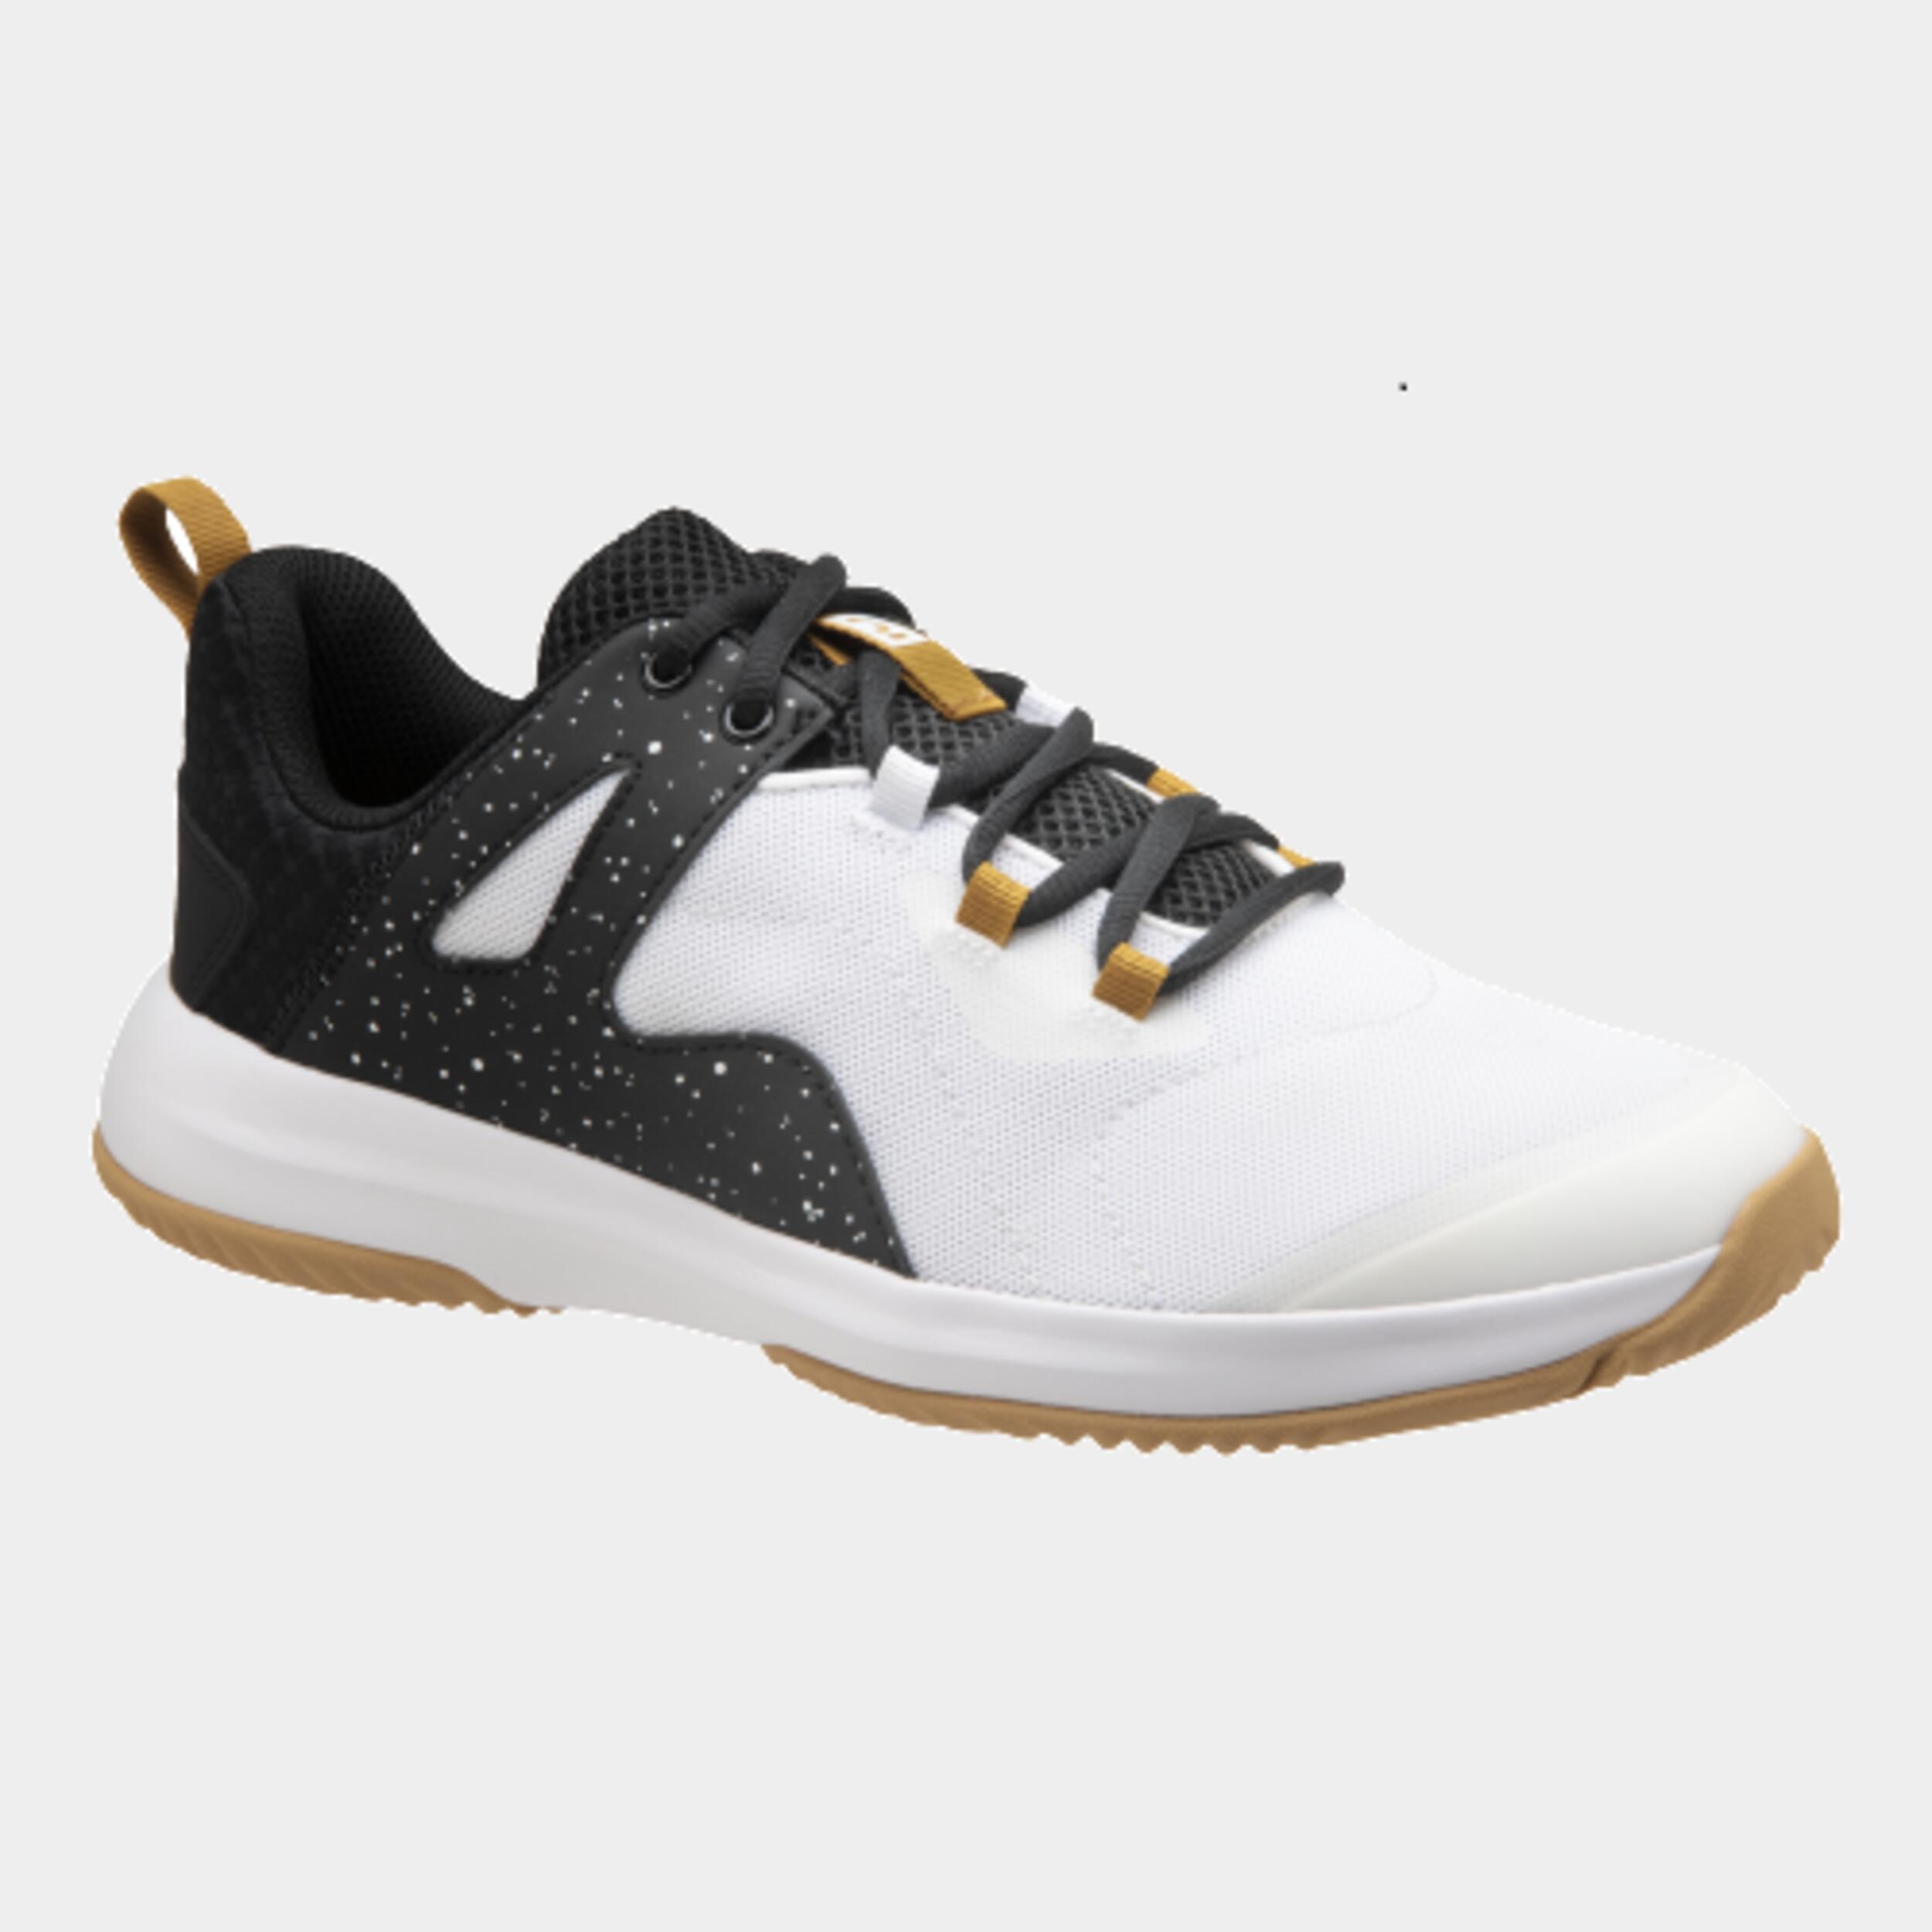 ATORKA Handball Shoes H300 - White/Black